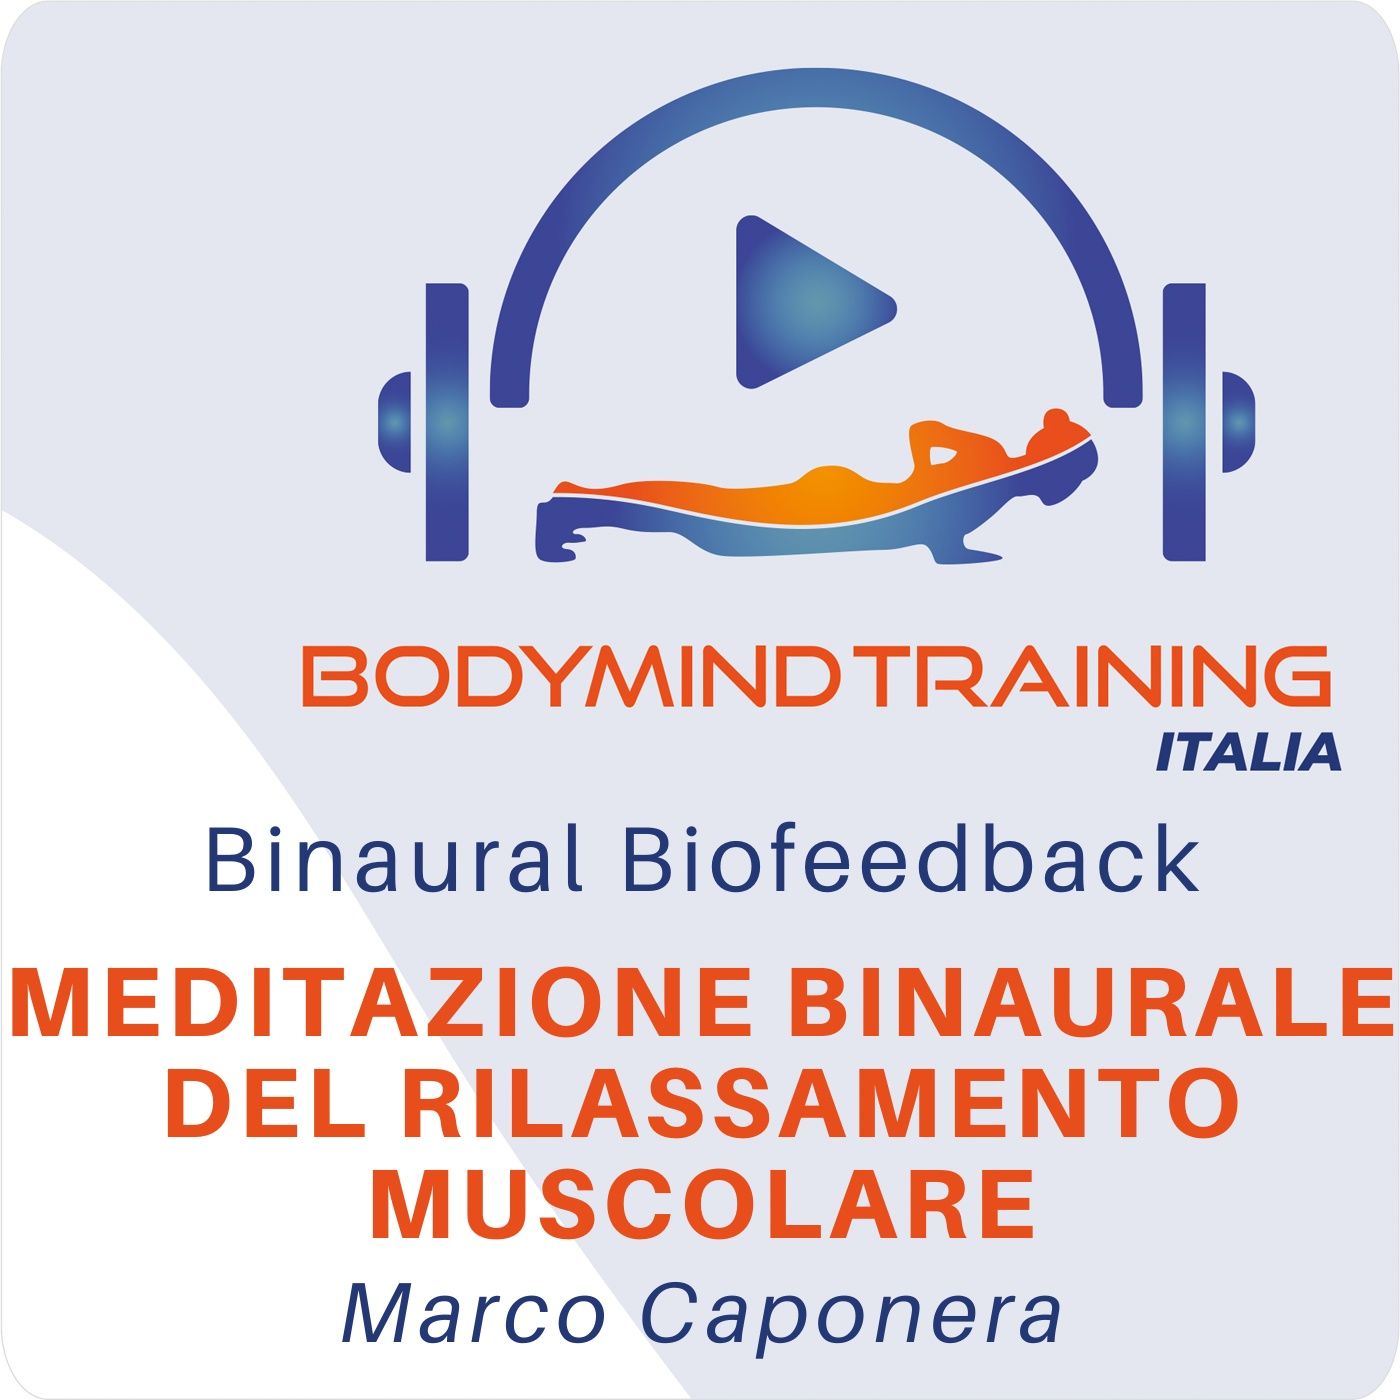 Meditazione Binaurale del Rilassamento Muscolare | Binaural Biofeedback